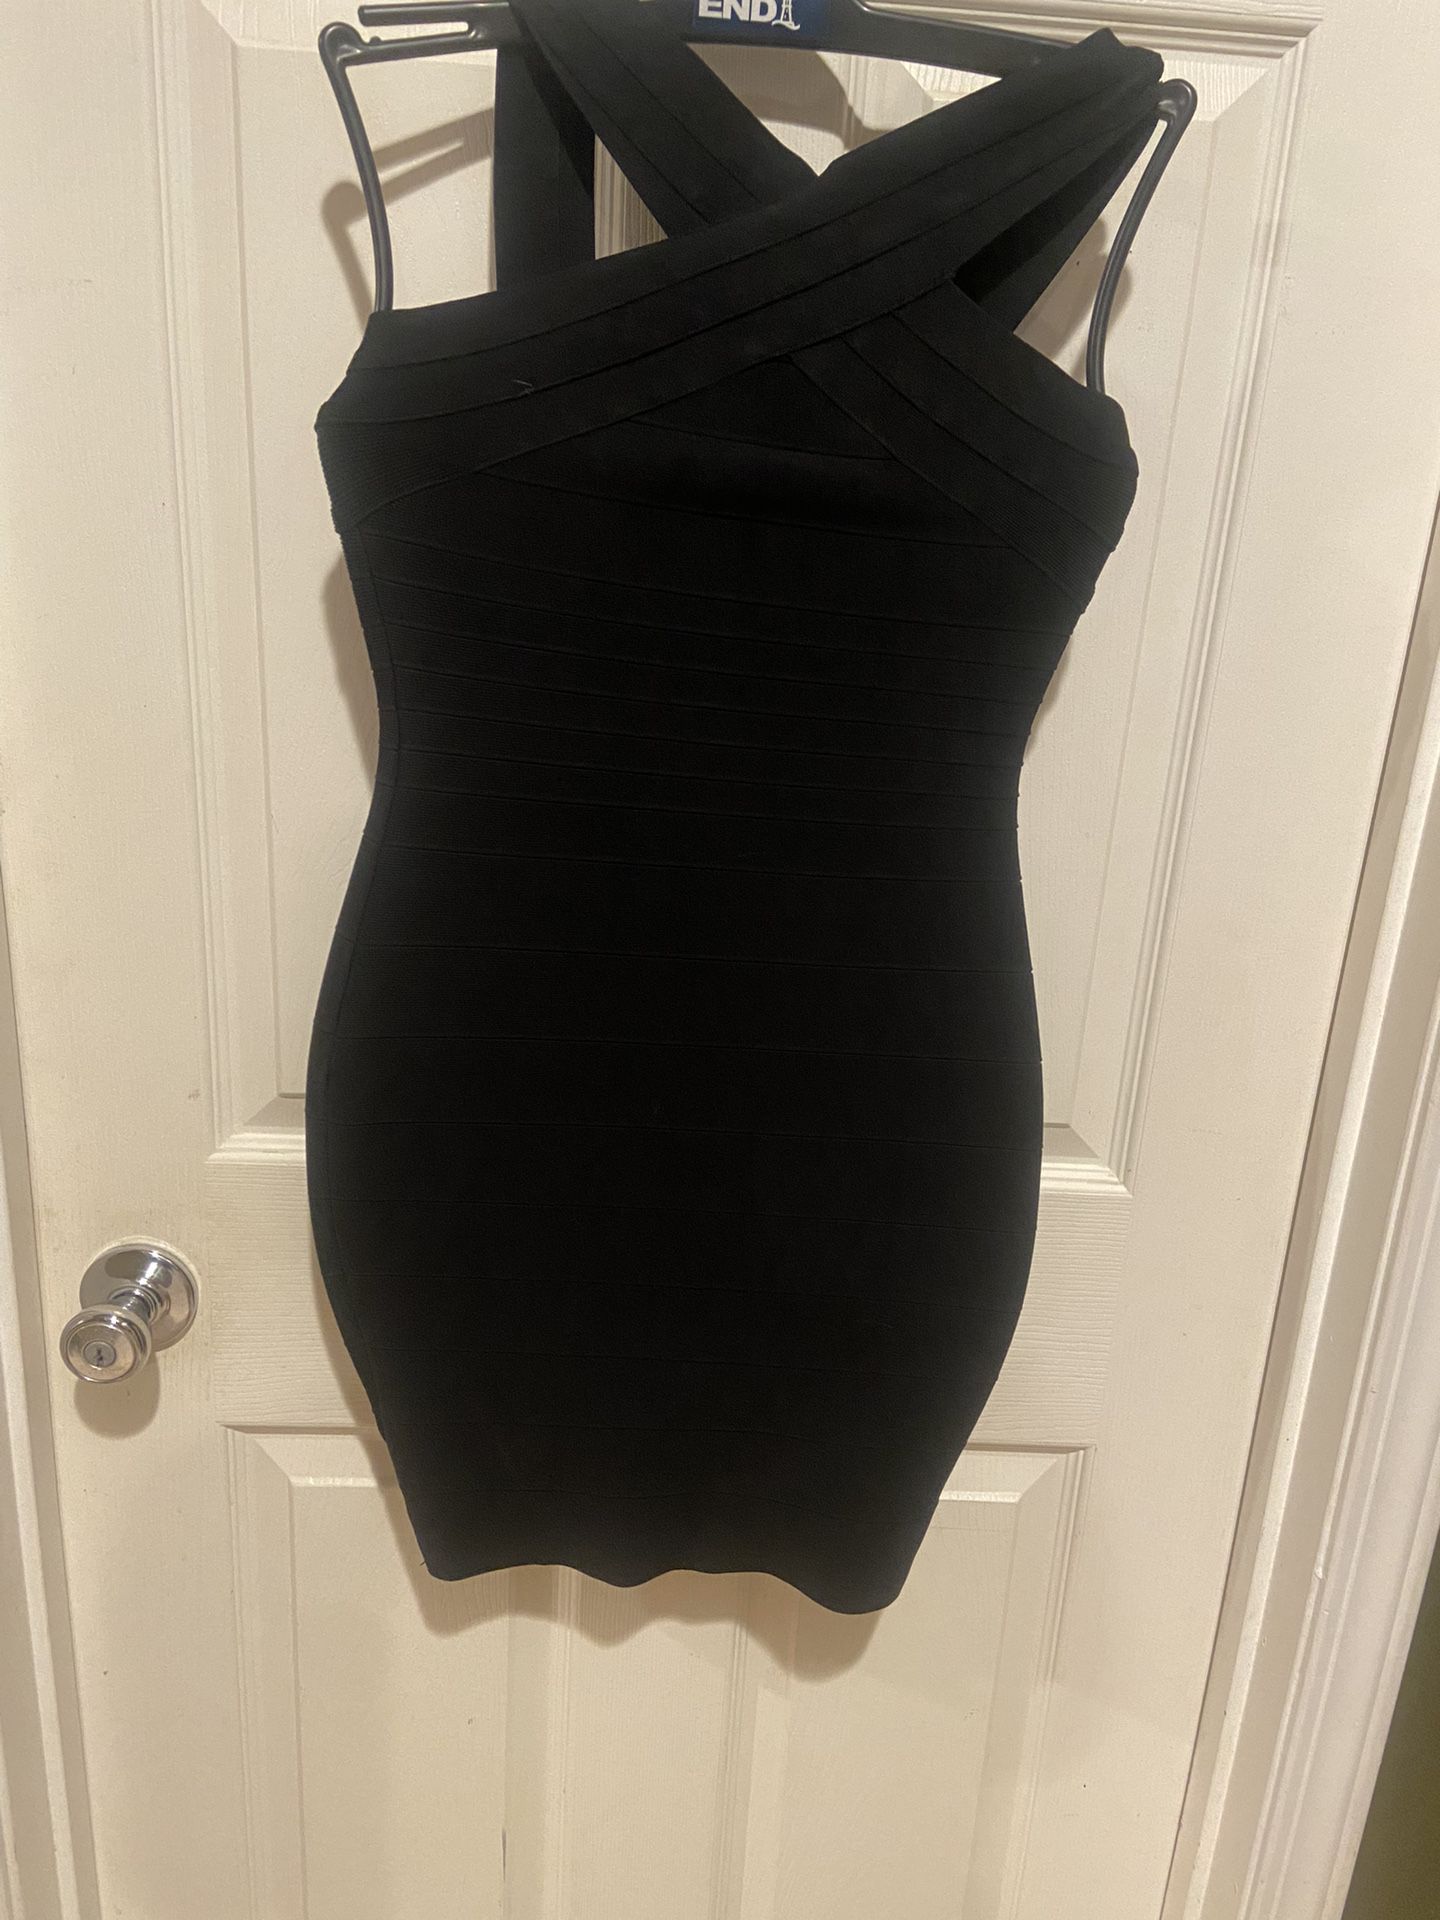 Selling A Black sexy Dress